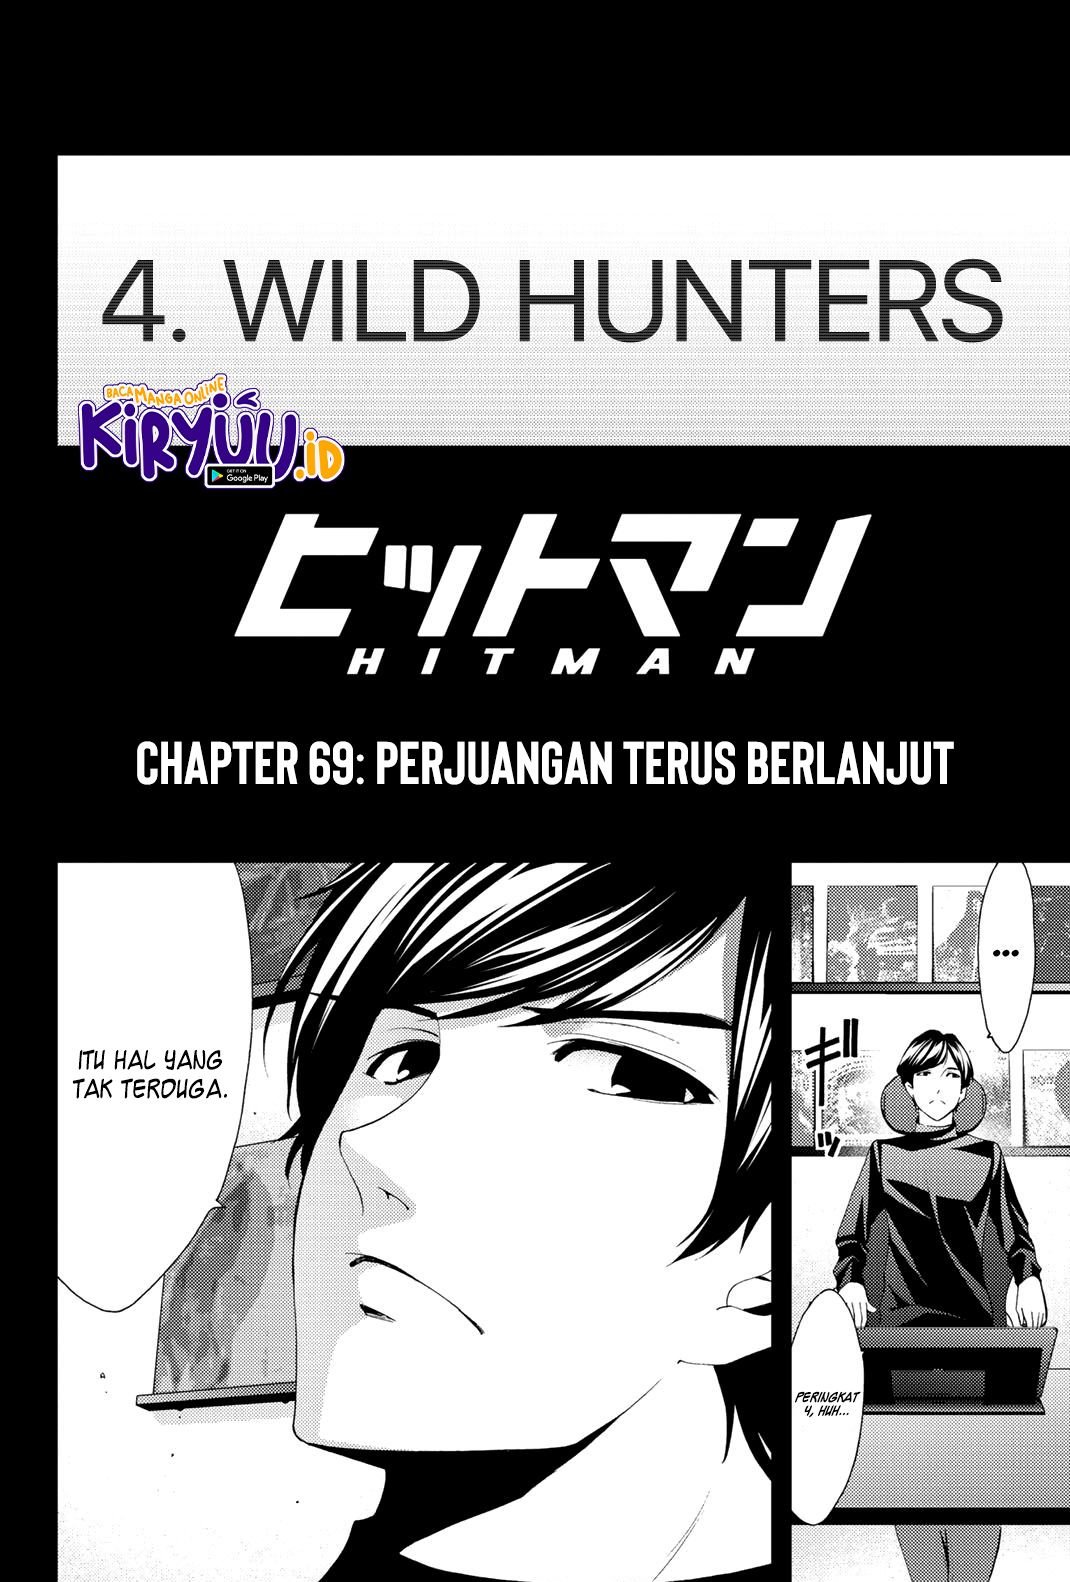 Hitman (SEO Kouji) Chapter 69